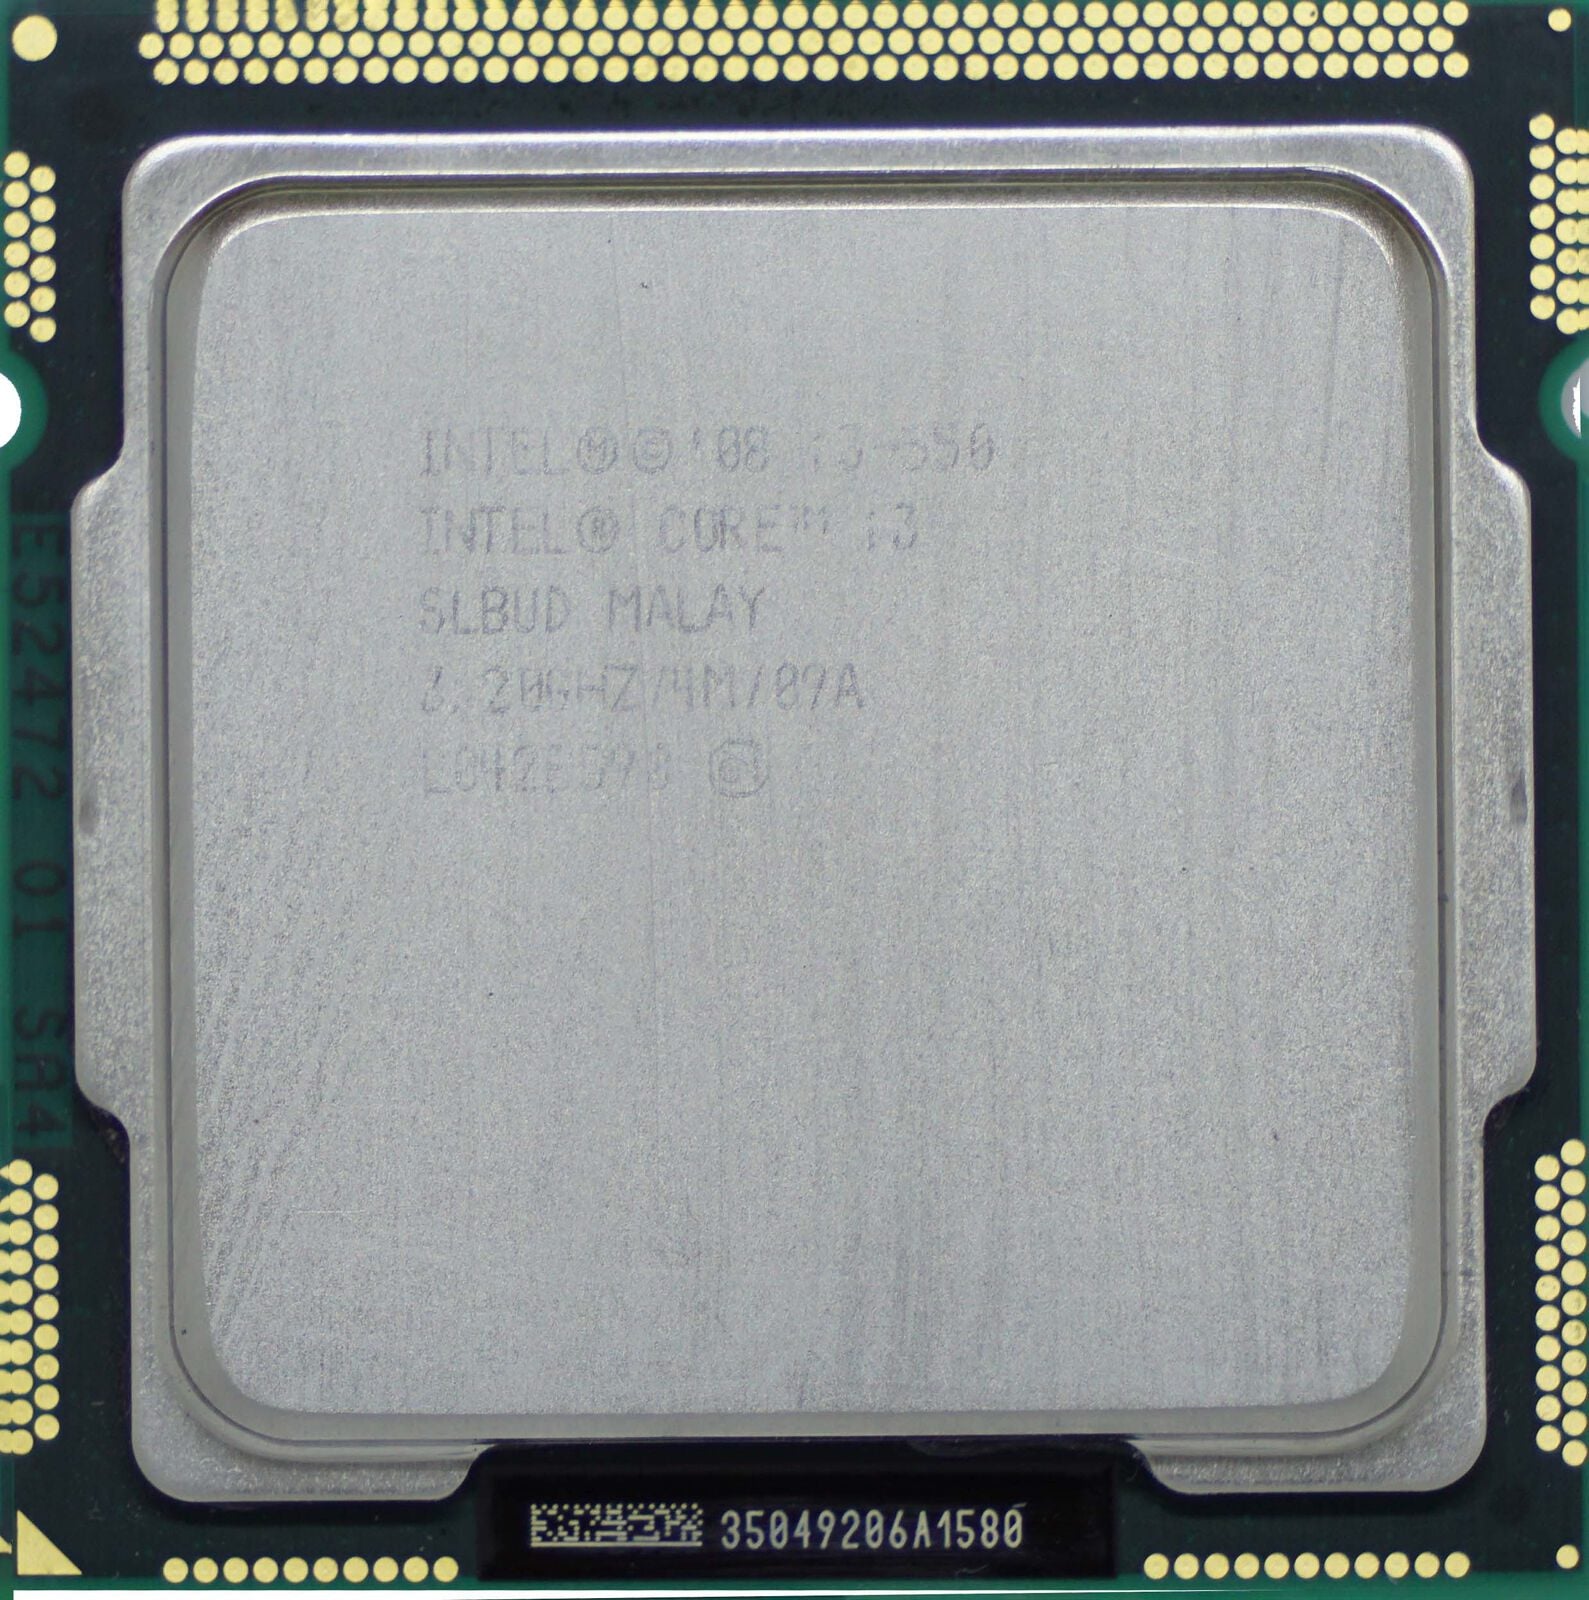 Intel Core i3-550 (Slbud) 3,20 GHz 2-Core LGA1156 CPU